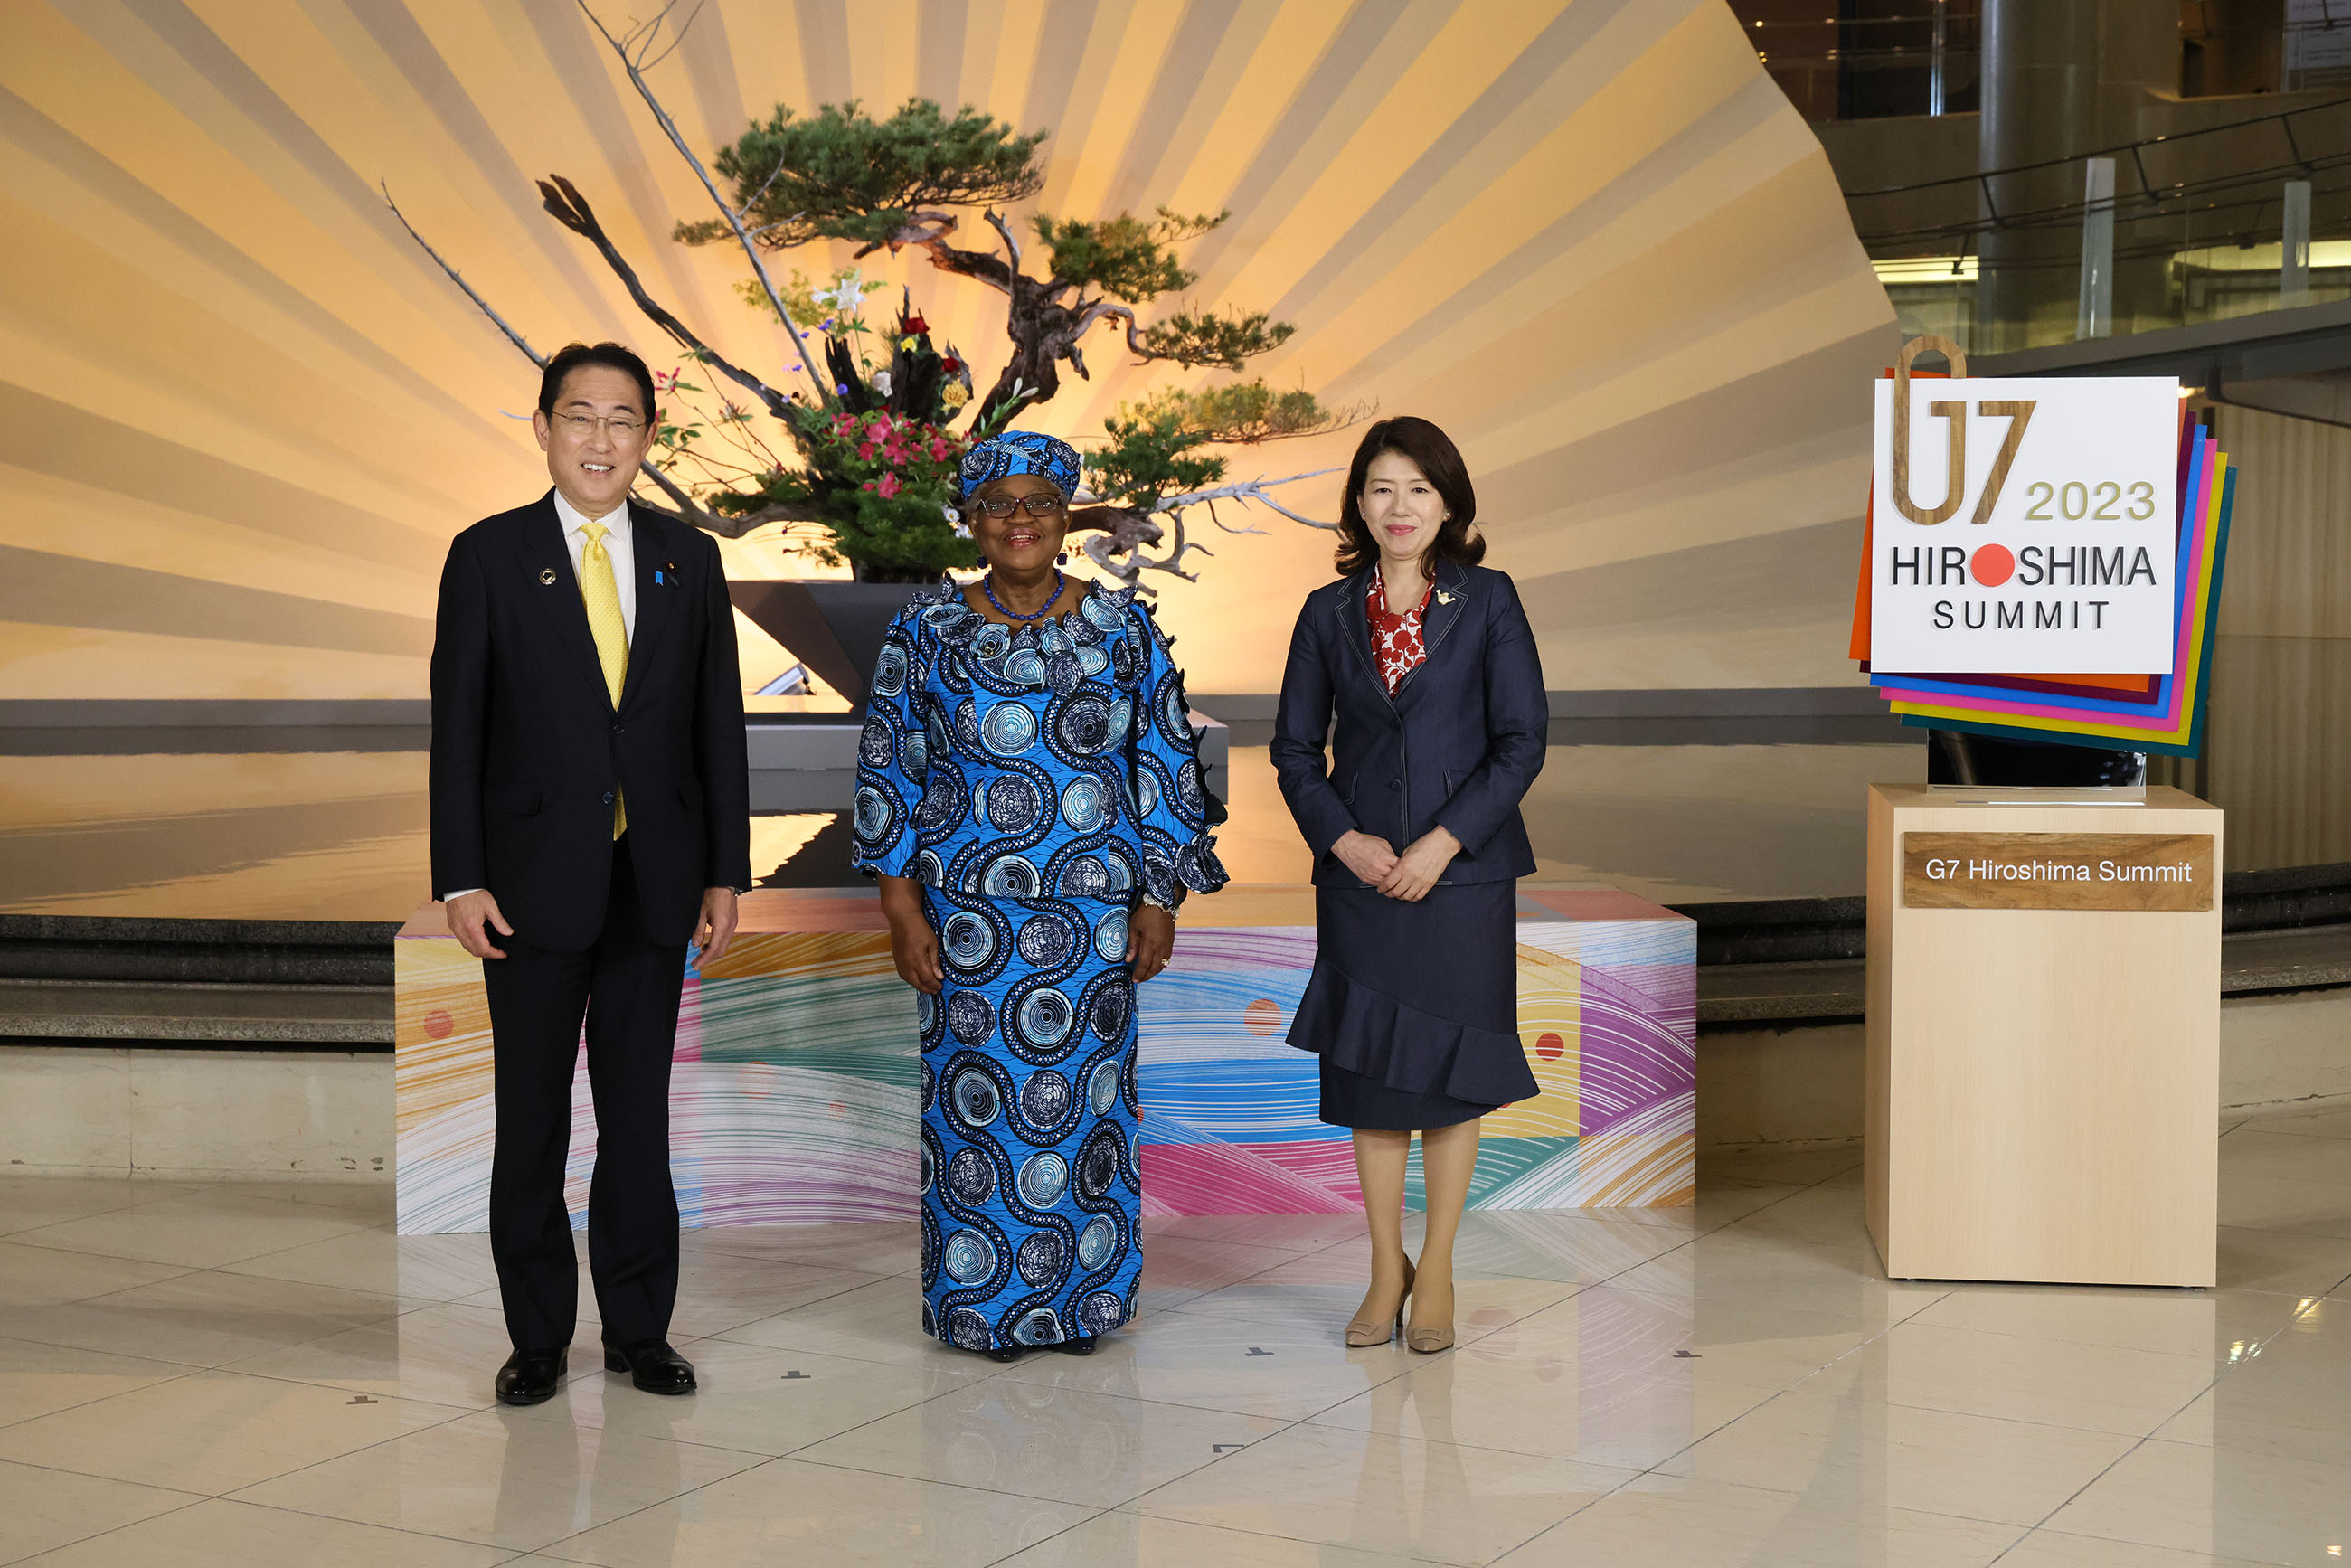 Prime Minister Kishida greeting the WTO Director-General Okonjo-Iweala